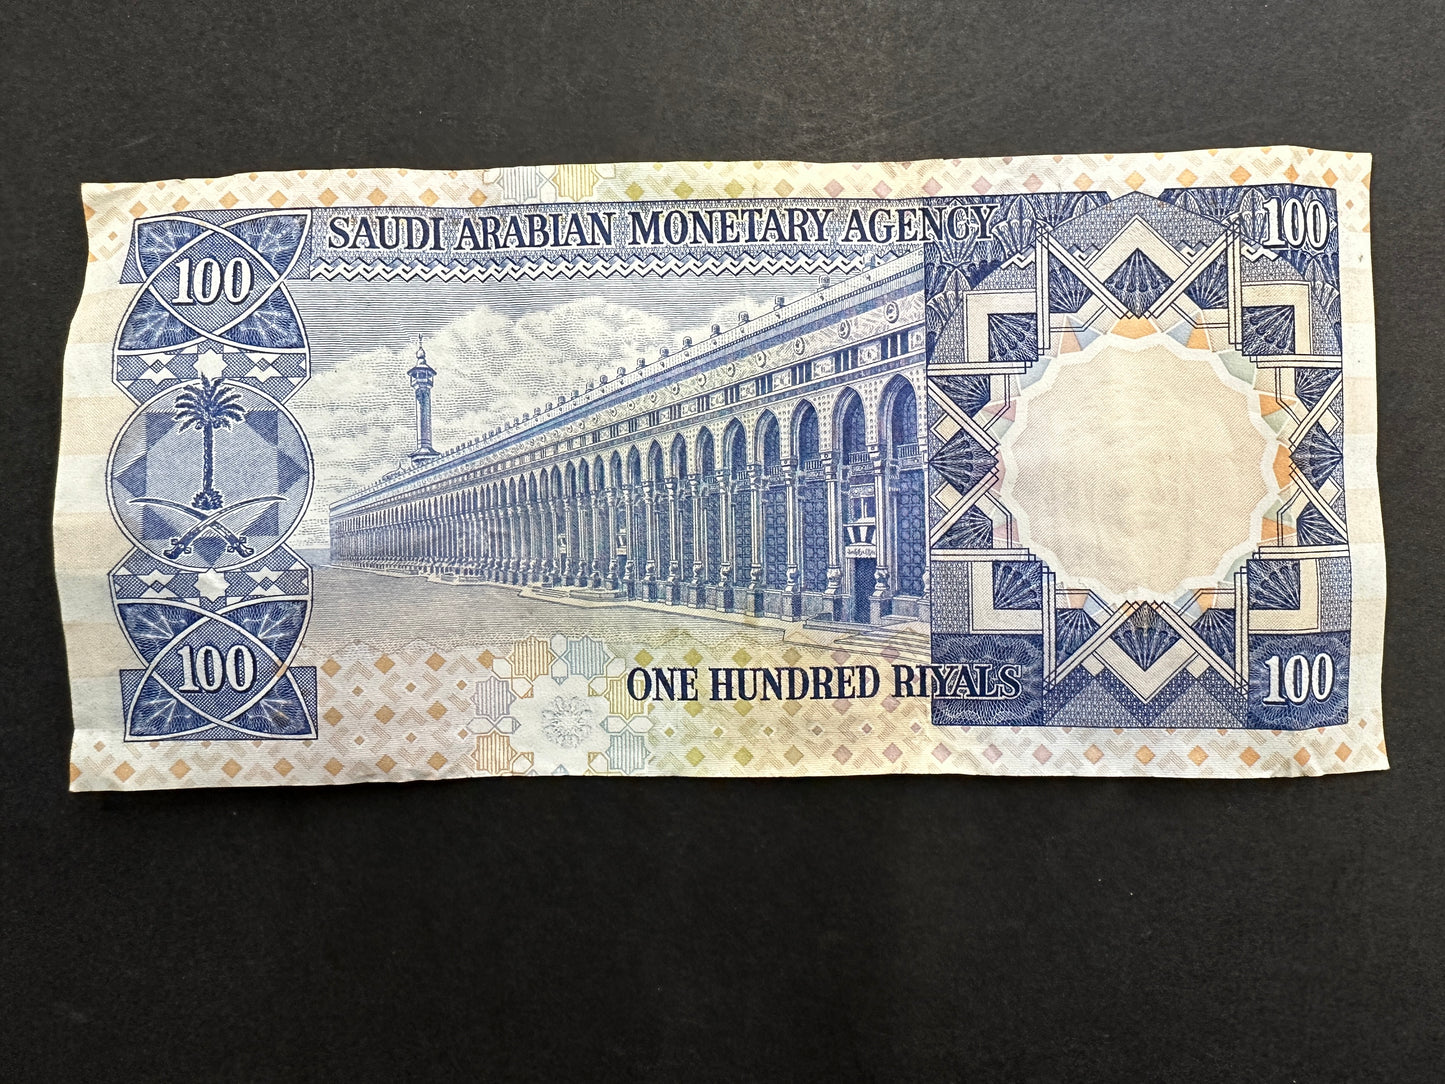 1 x 100 Rials (Riyals) Saudi Arabian Banknote - Rare and Interesting - FREE Postage